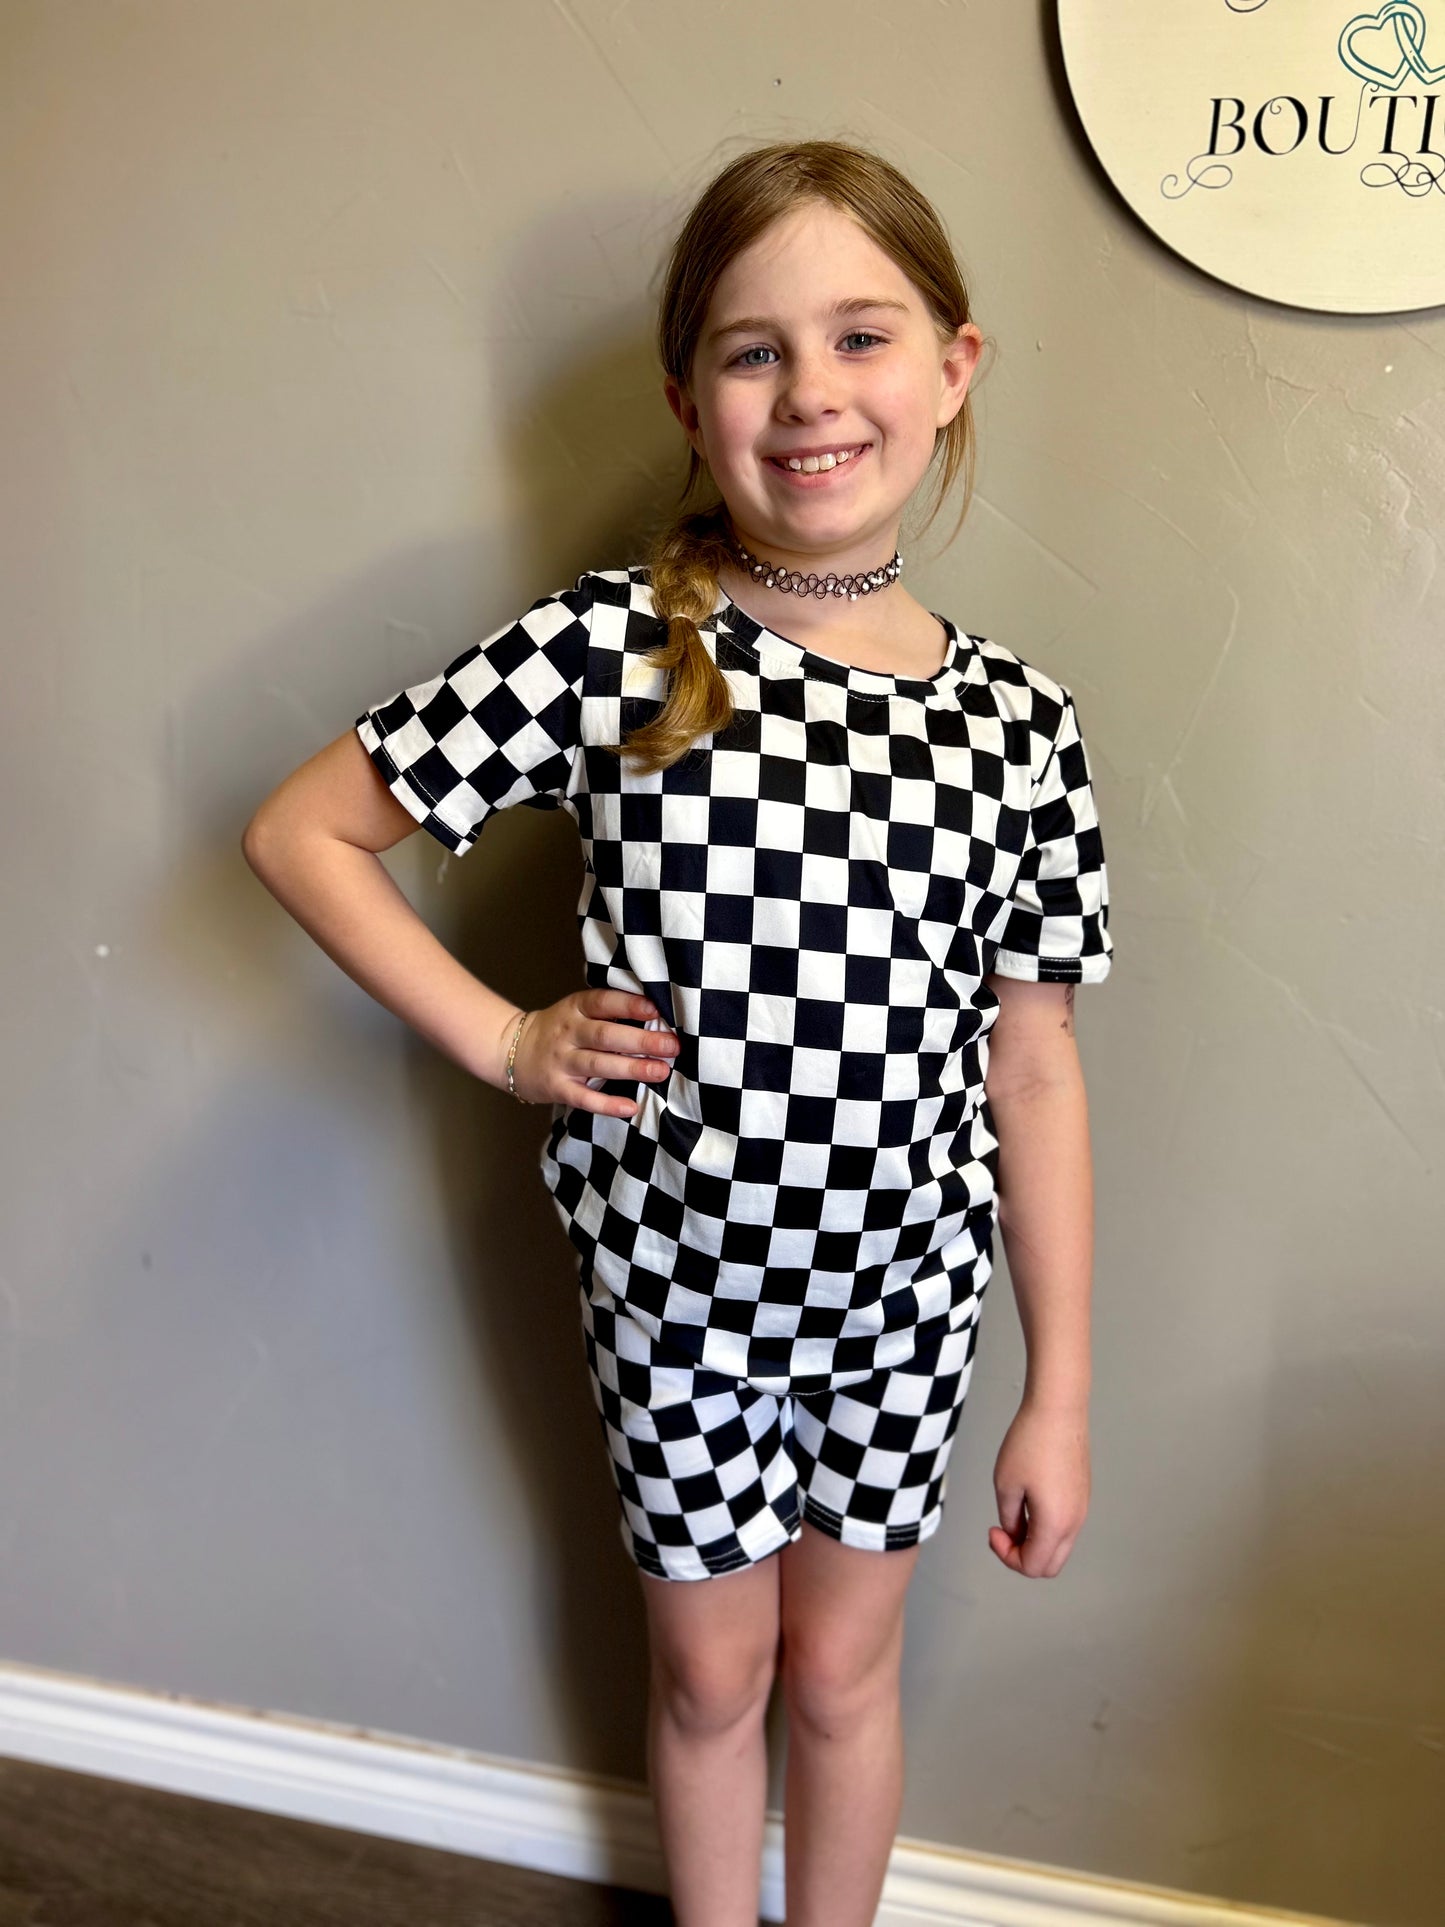 Checkered shirt set